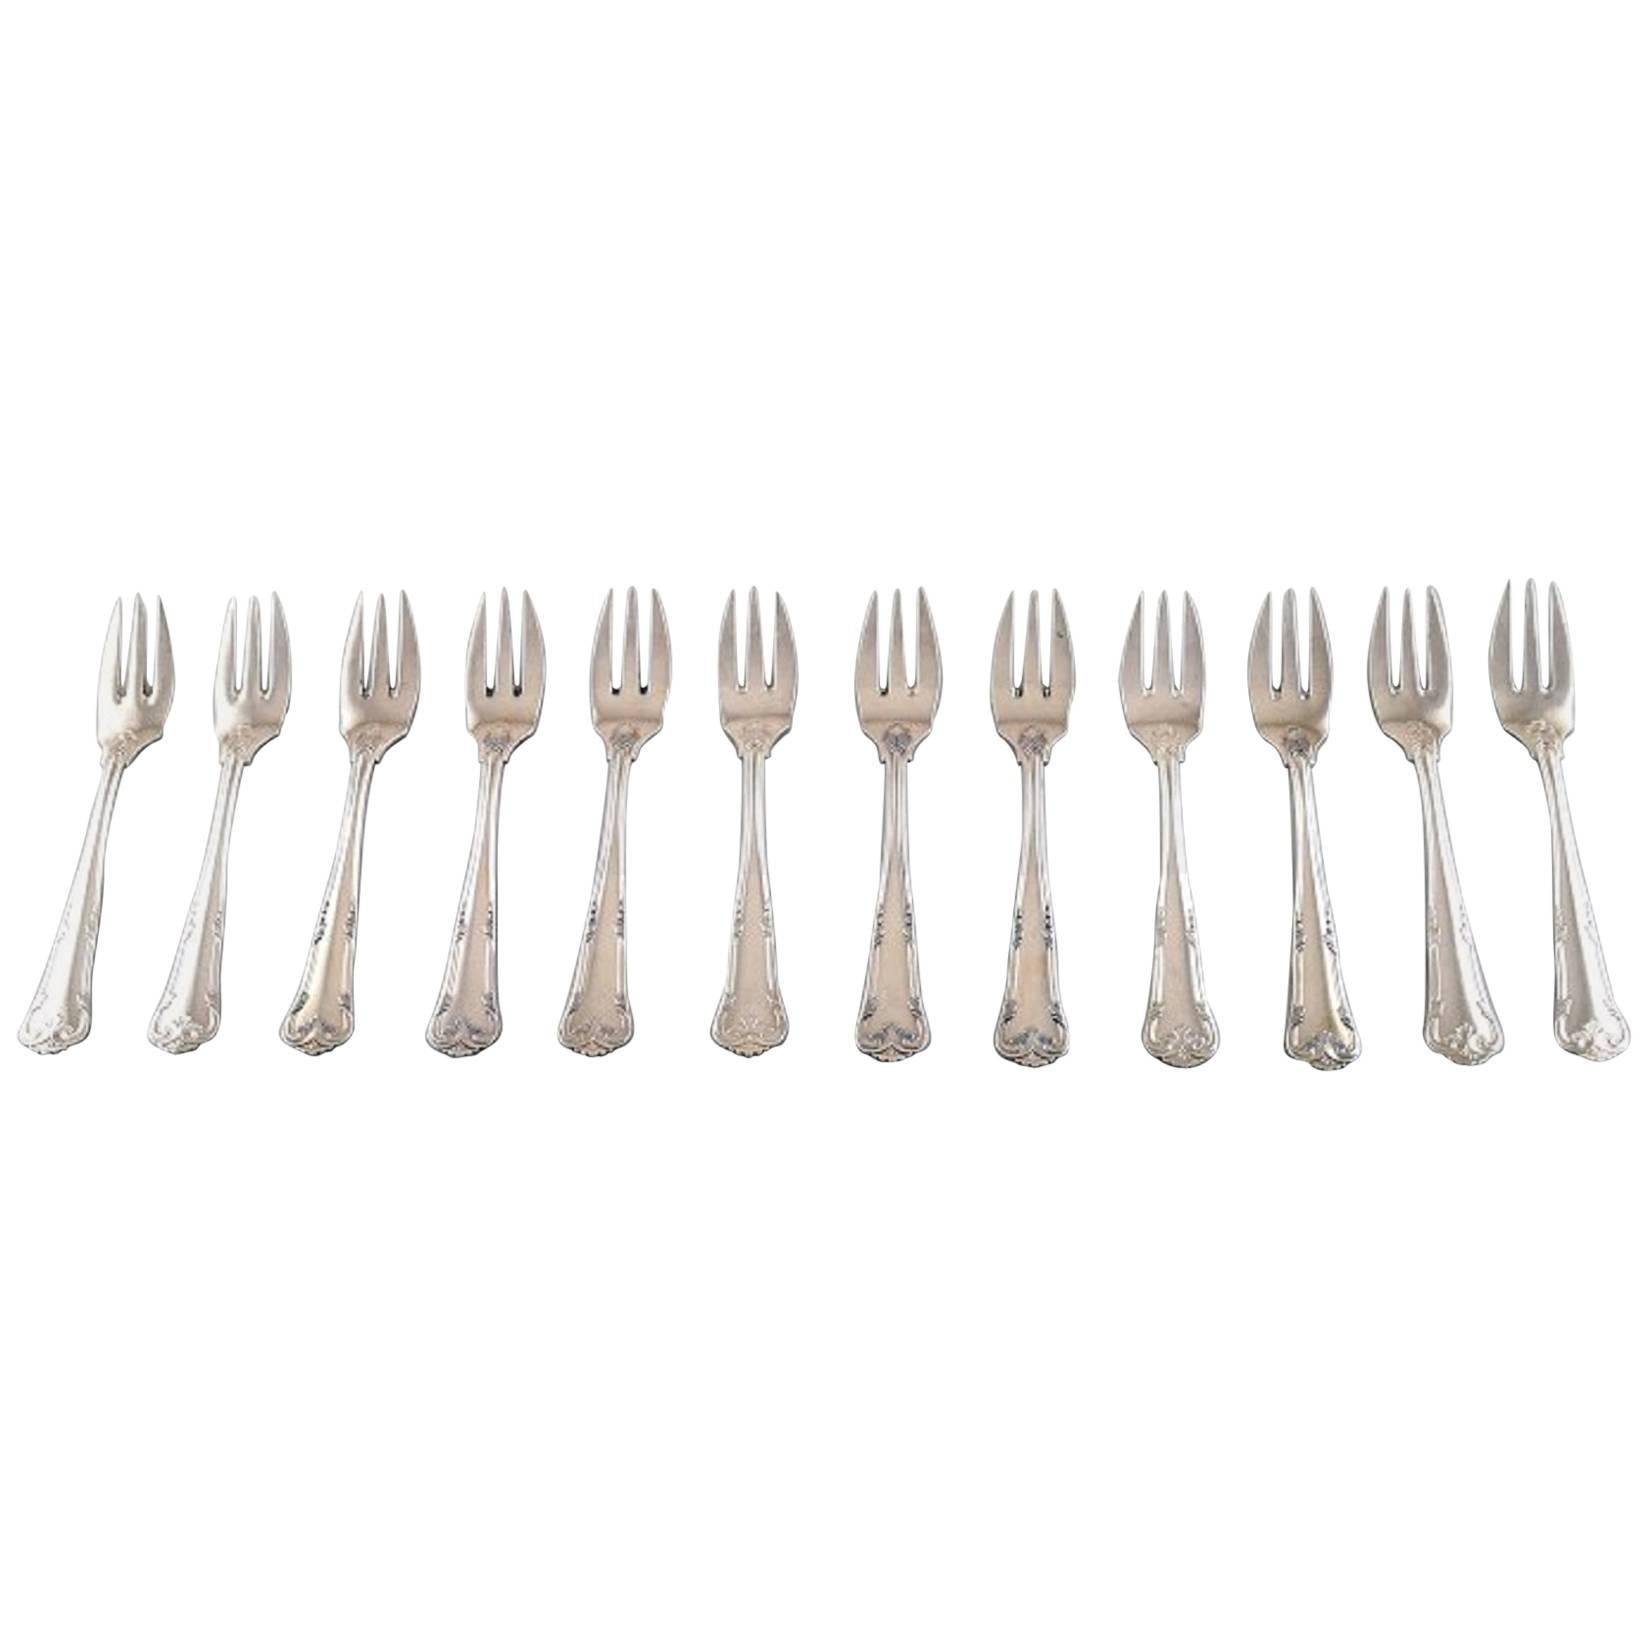 12 Pastry Forks, Cohr, Denmark, "Herregaard" Silver Cutlery